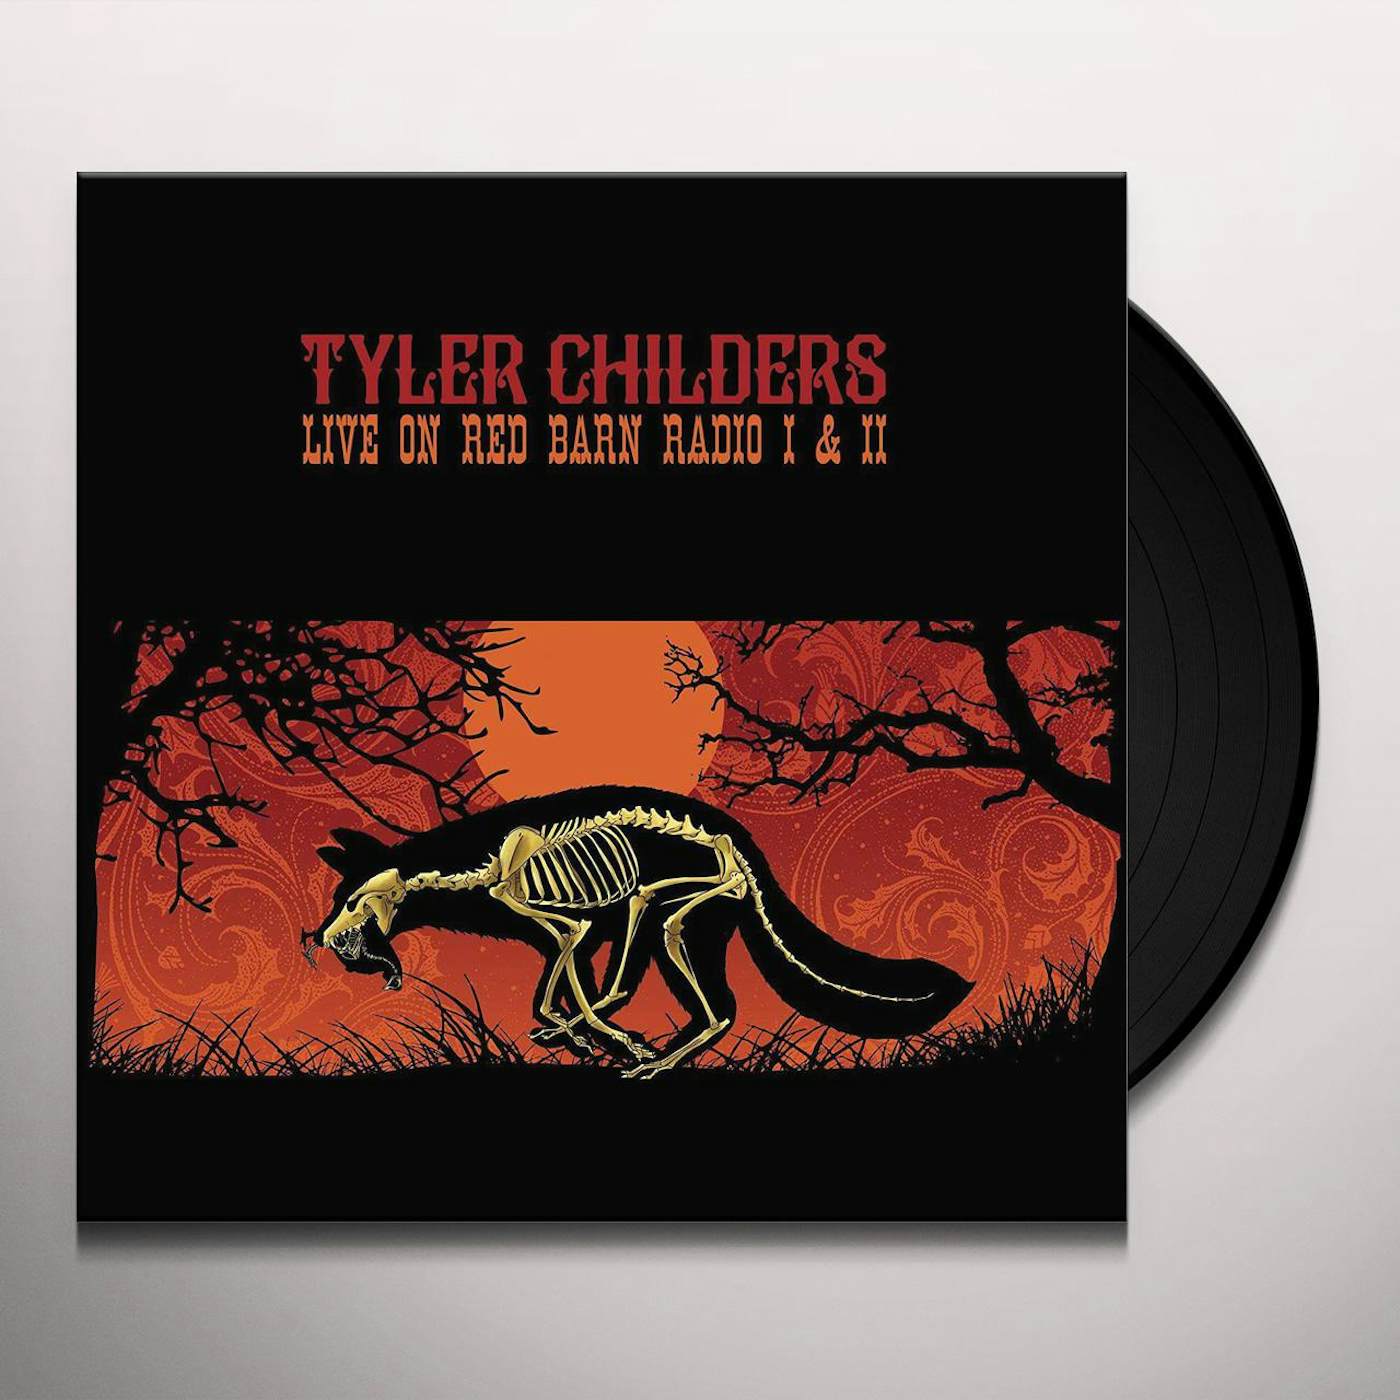 Tyler Childers Live On Red Barn Radio I & II Vinyl Record